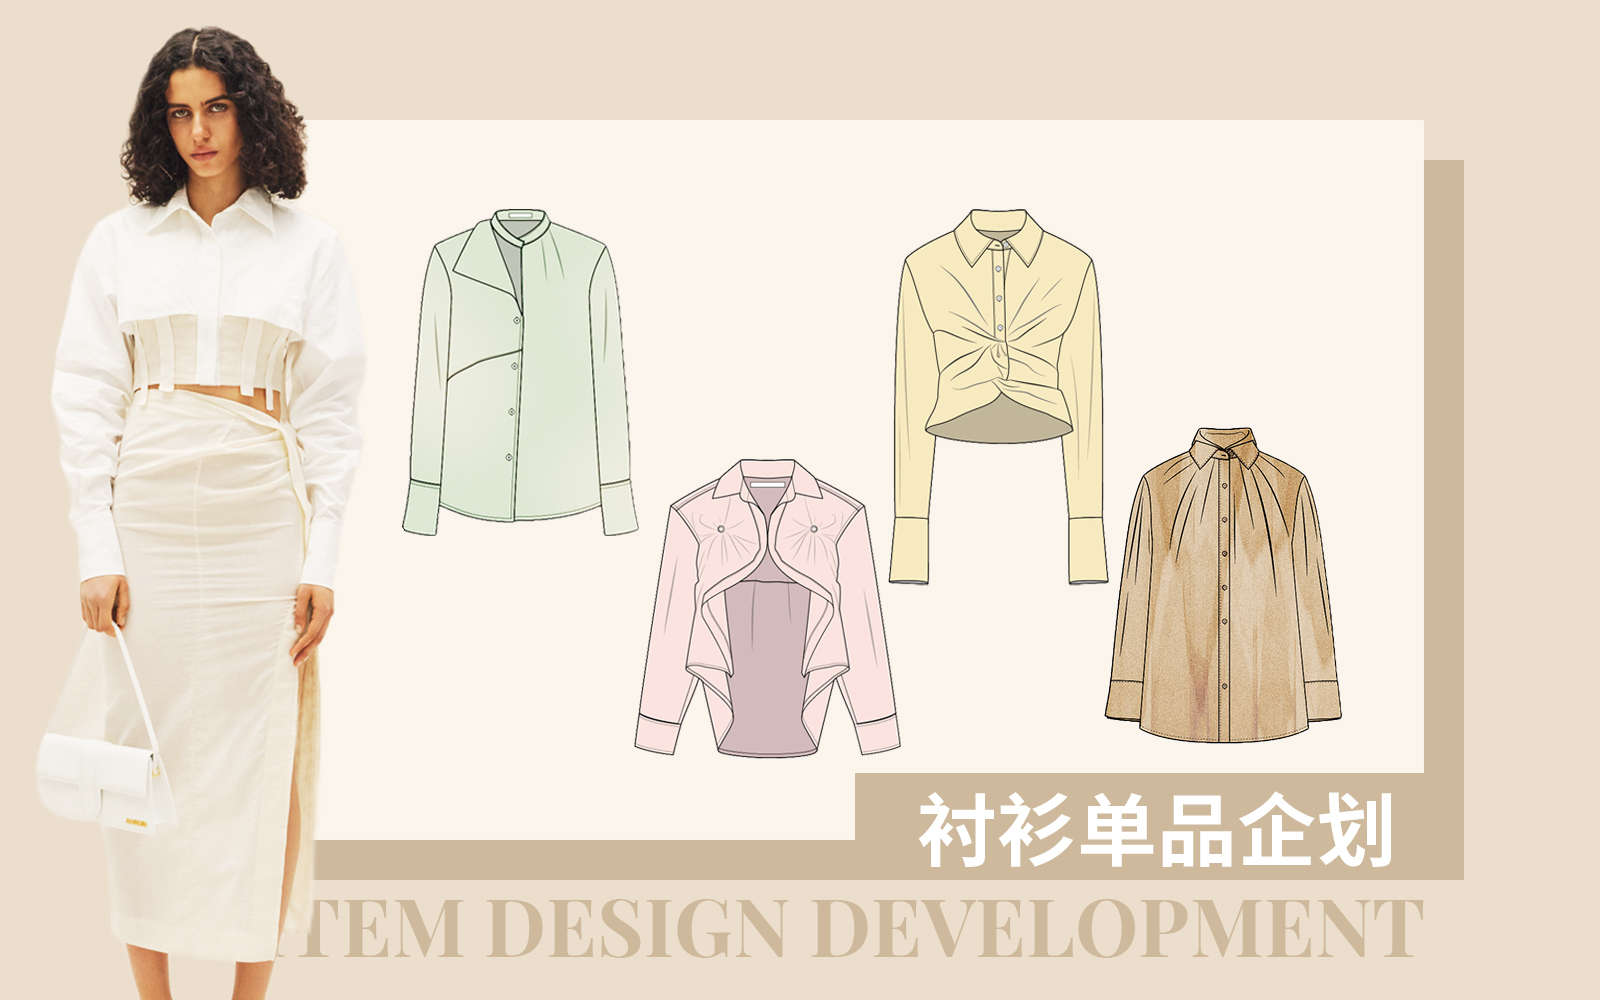 Sleek & Minimal -- The Design Development of Women's Shirt